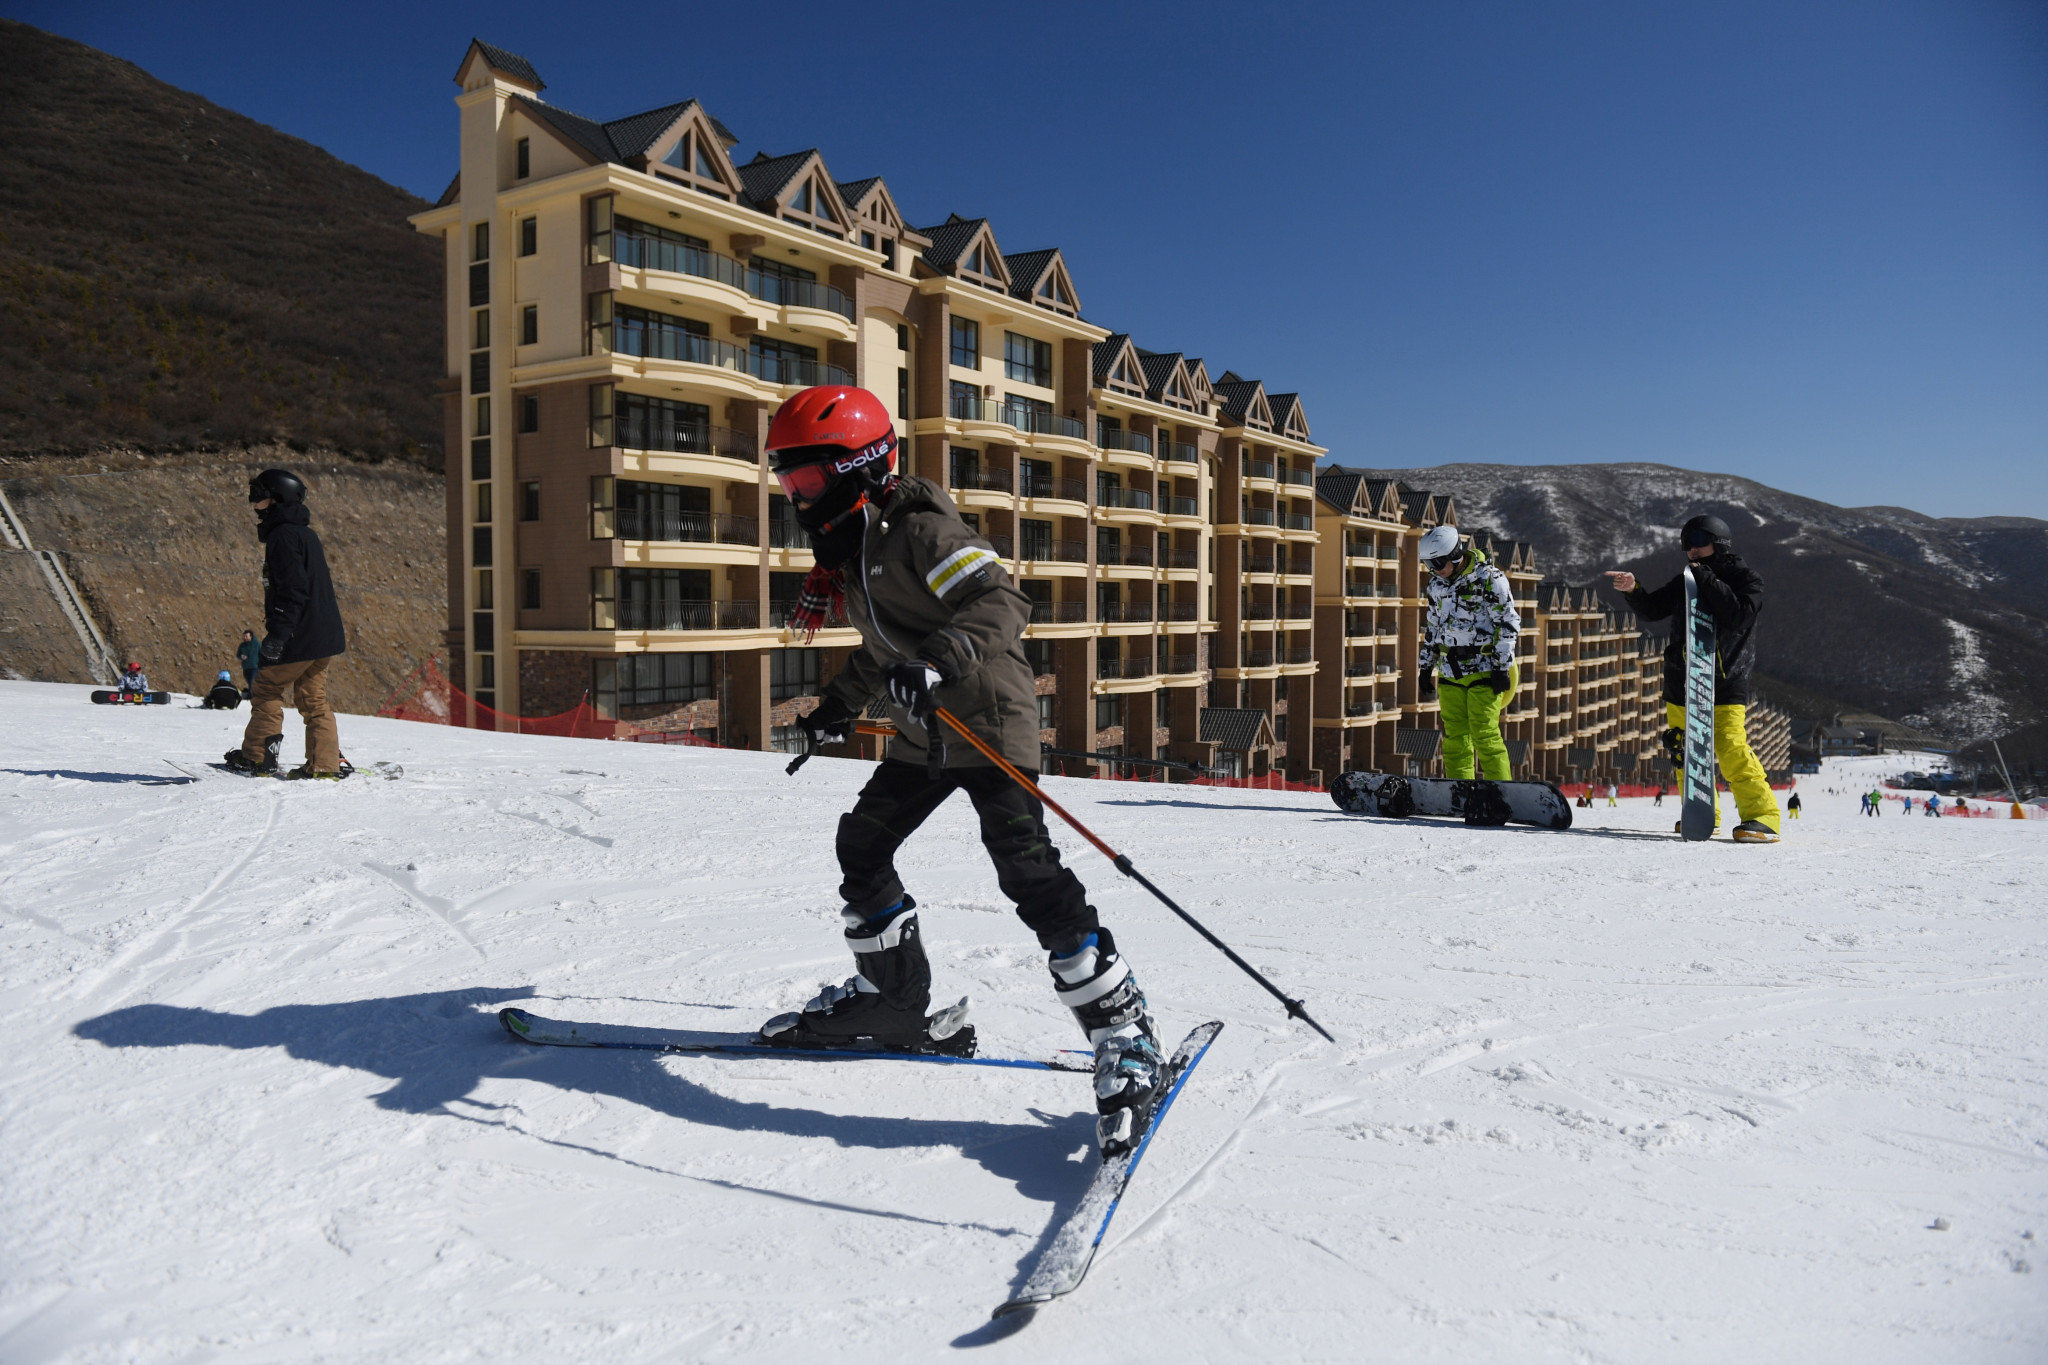 Beijing 2022 Winter Olympic skiing venue Chongli experiences hotel boom